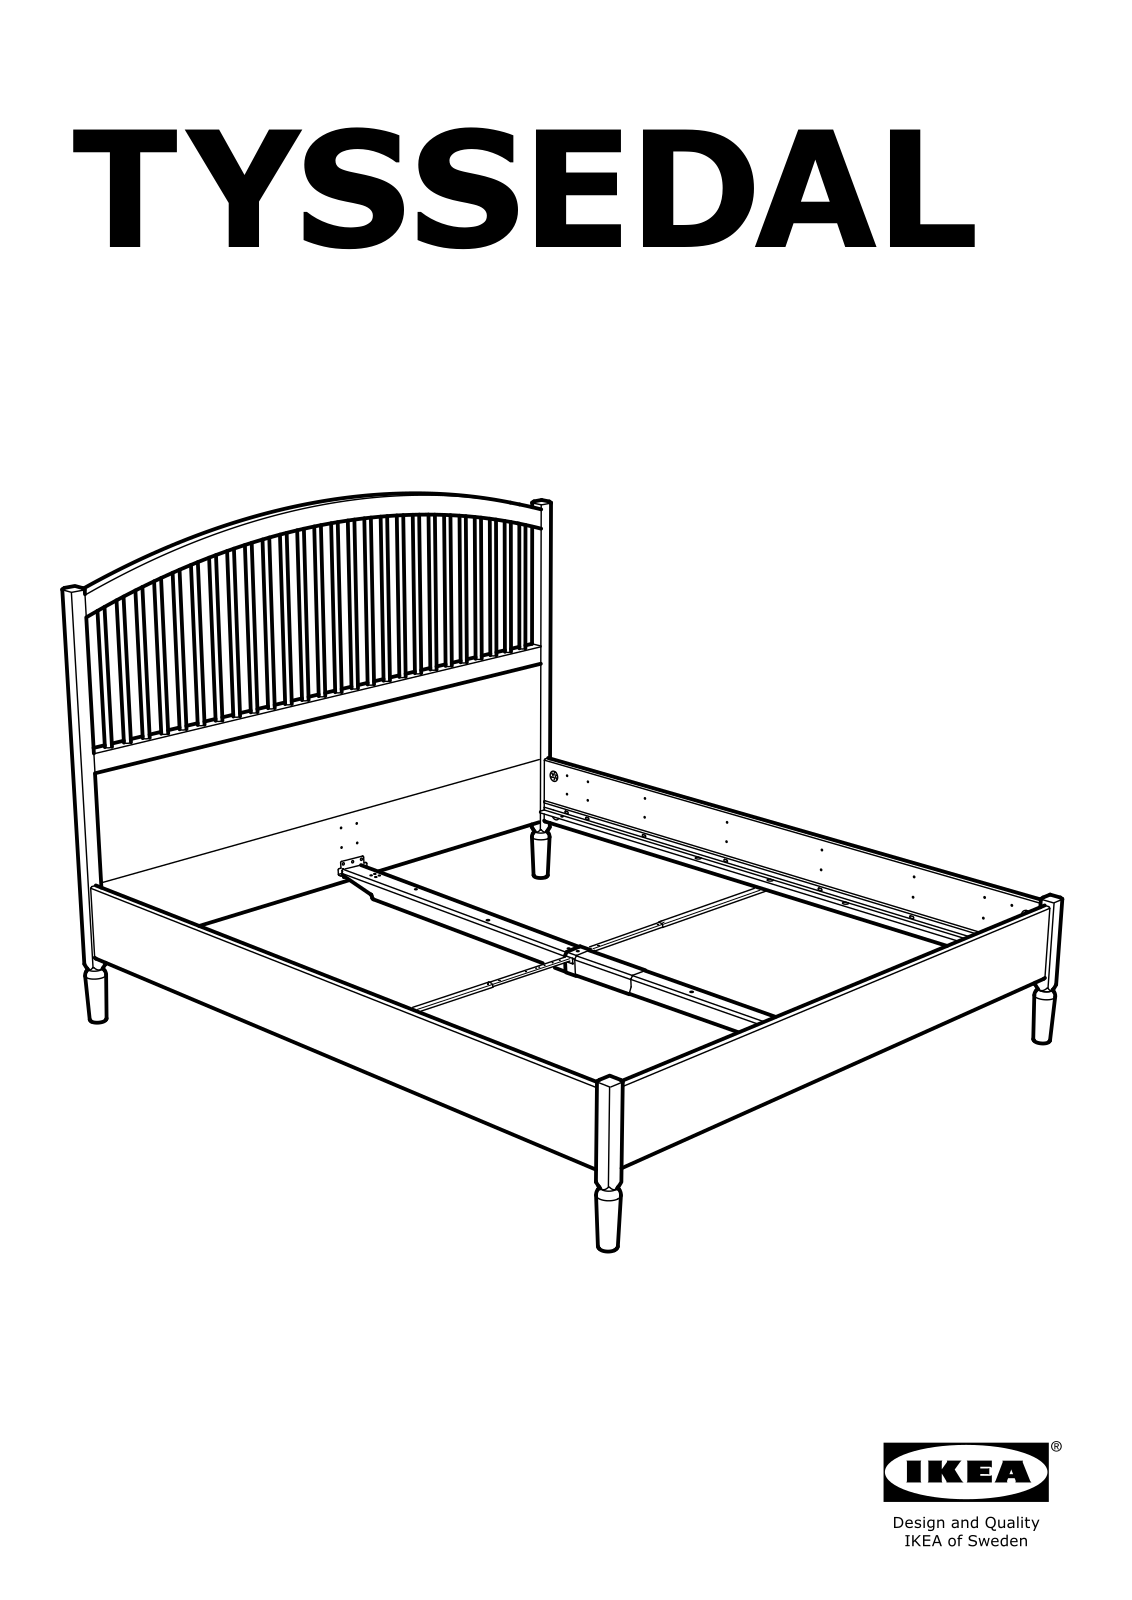 IKEA TYSSEDAL Bed frame Assembly Instruction